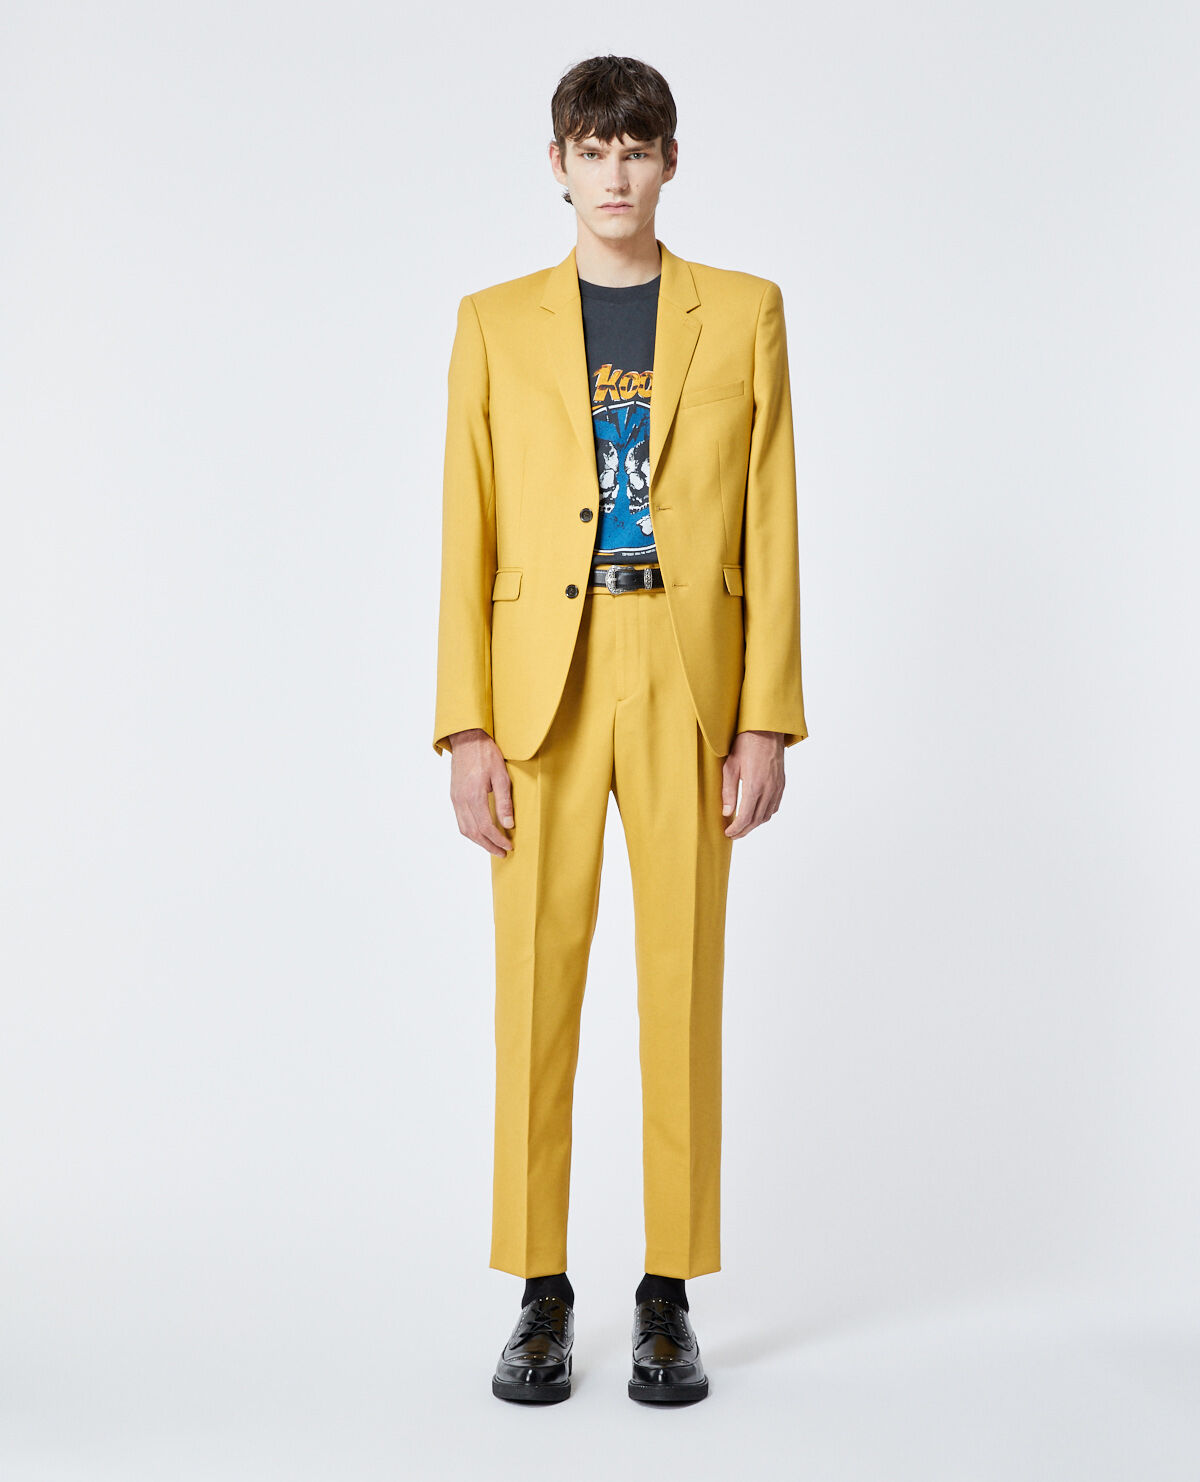 New Woman's Pants Set Suit Size1-2 Turkish US14/16 and 18/20 Lemon Yellow  color | eBay